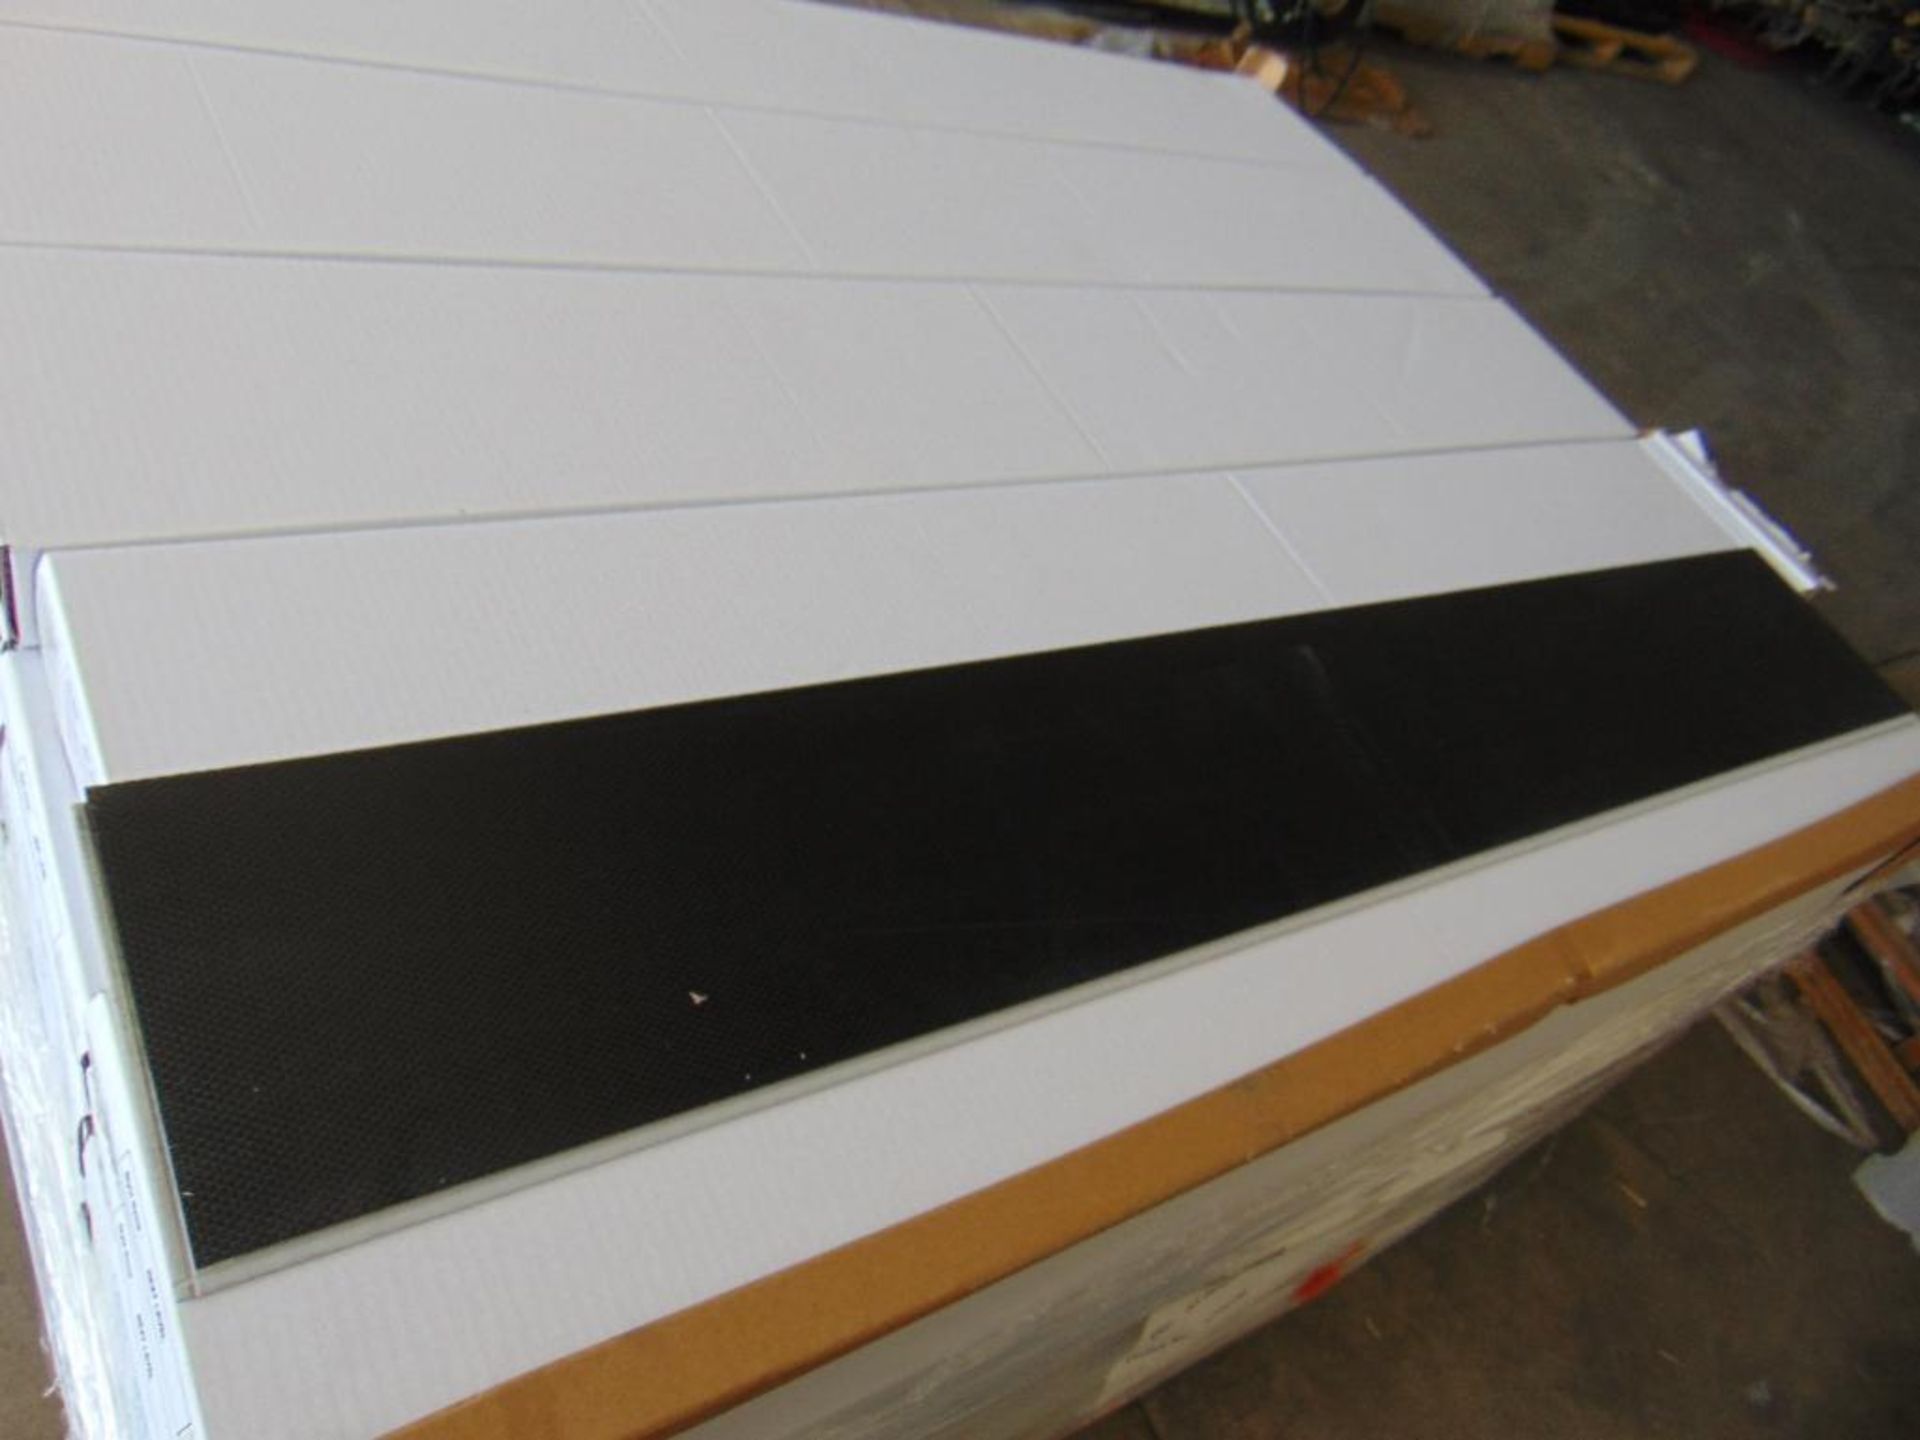 630.96 SF Waterproof Vinyl Plank - Next Level Toffee Snap Together Flooring - Image 3 of 6